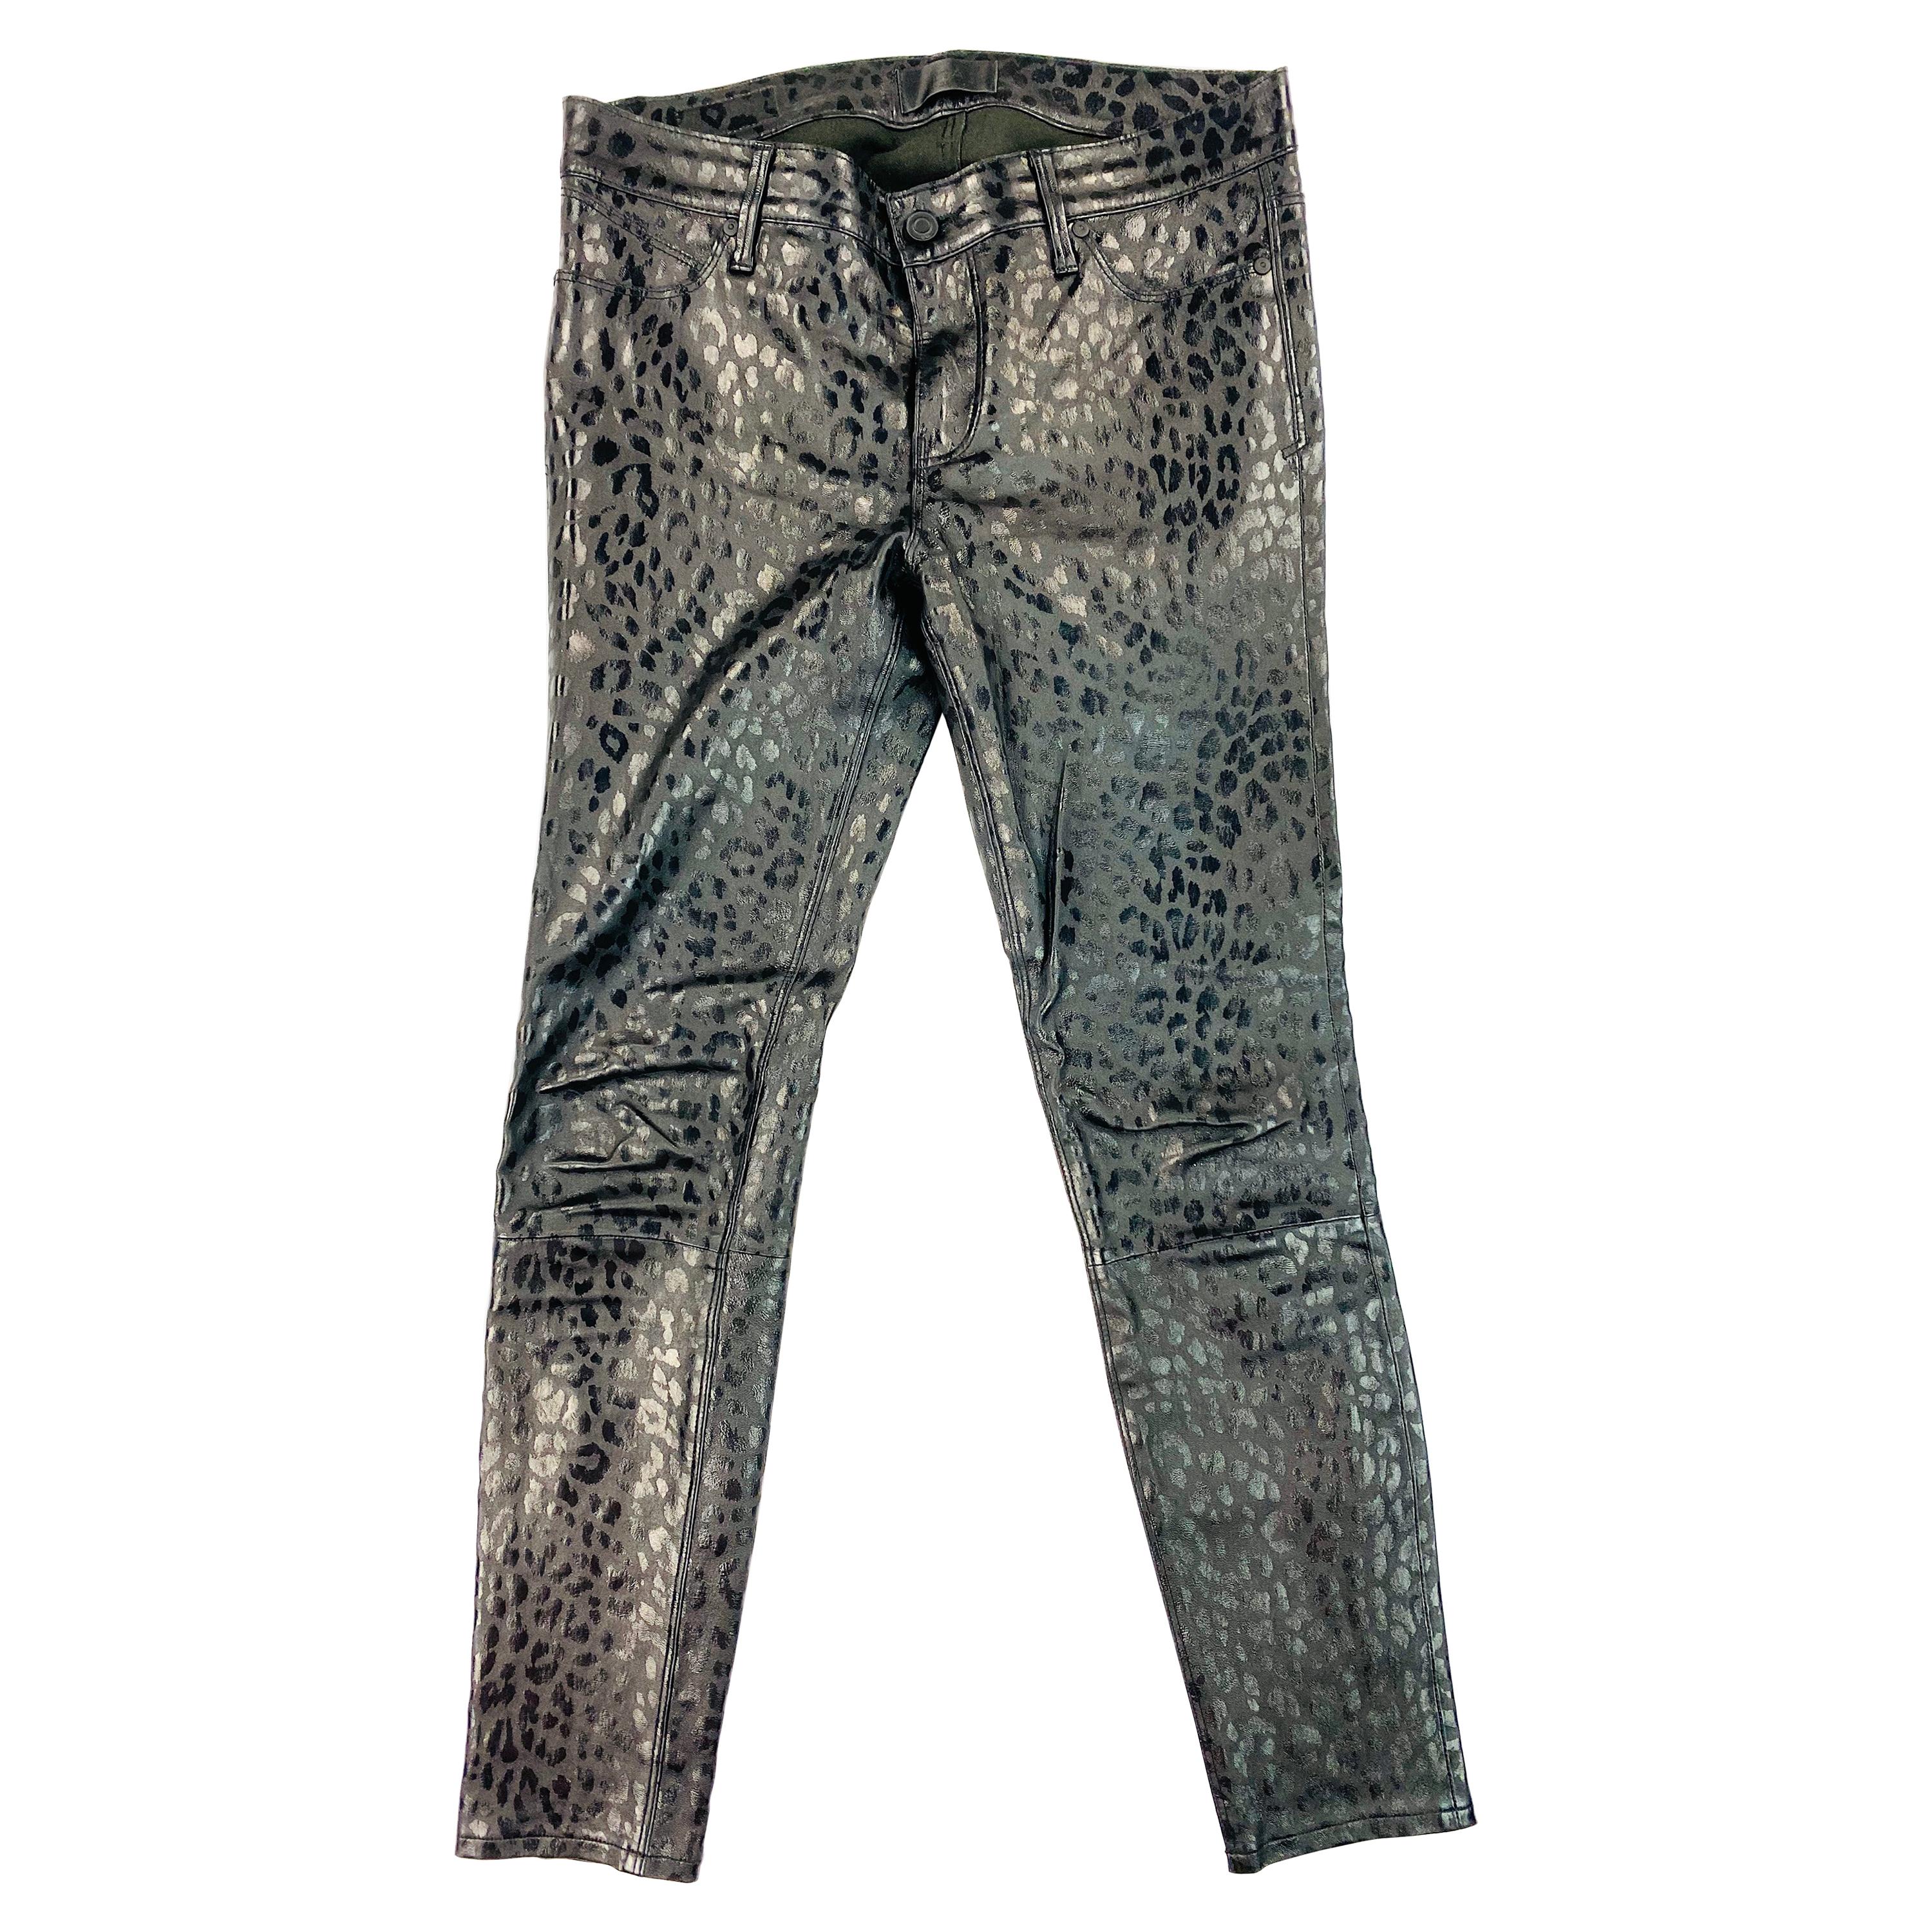 RTA Black Leather Animal Print Skinny Pants Jeans Size 28